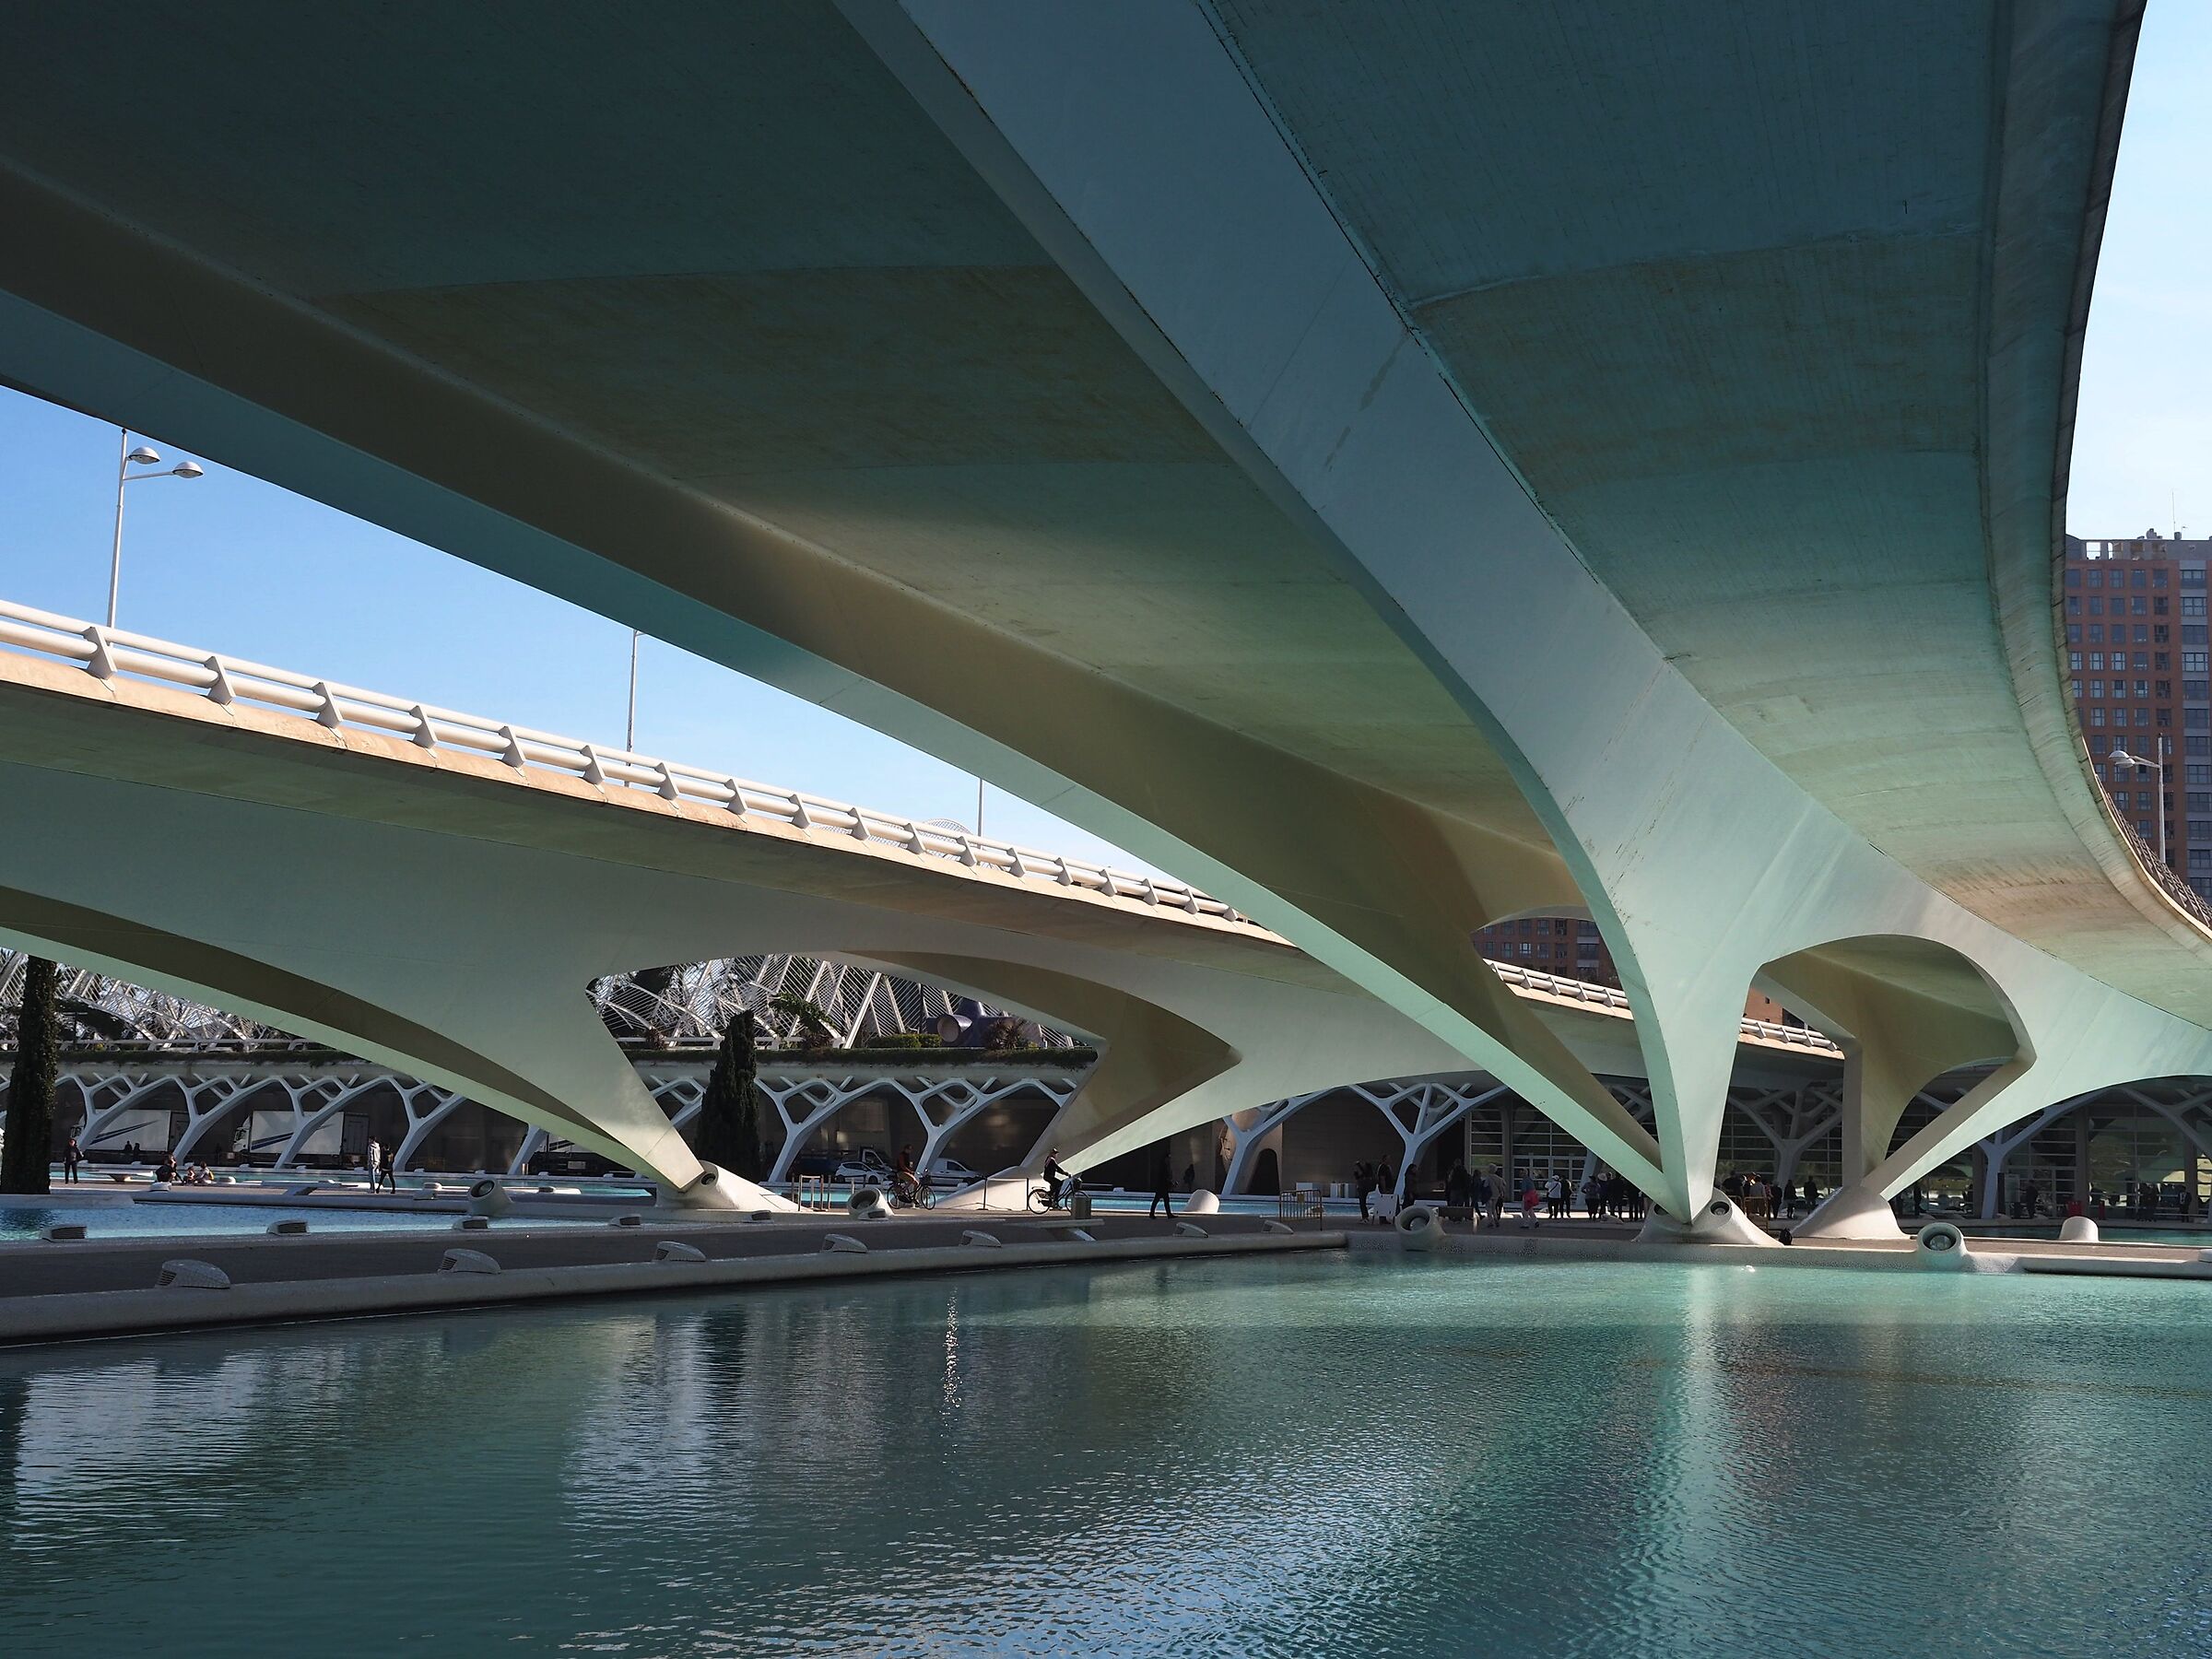 Valencia science city of Calatrava 2...